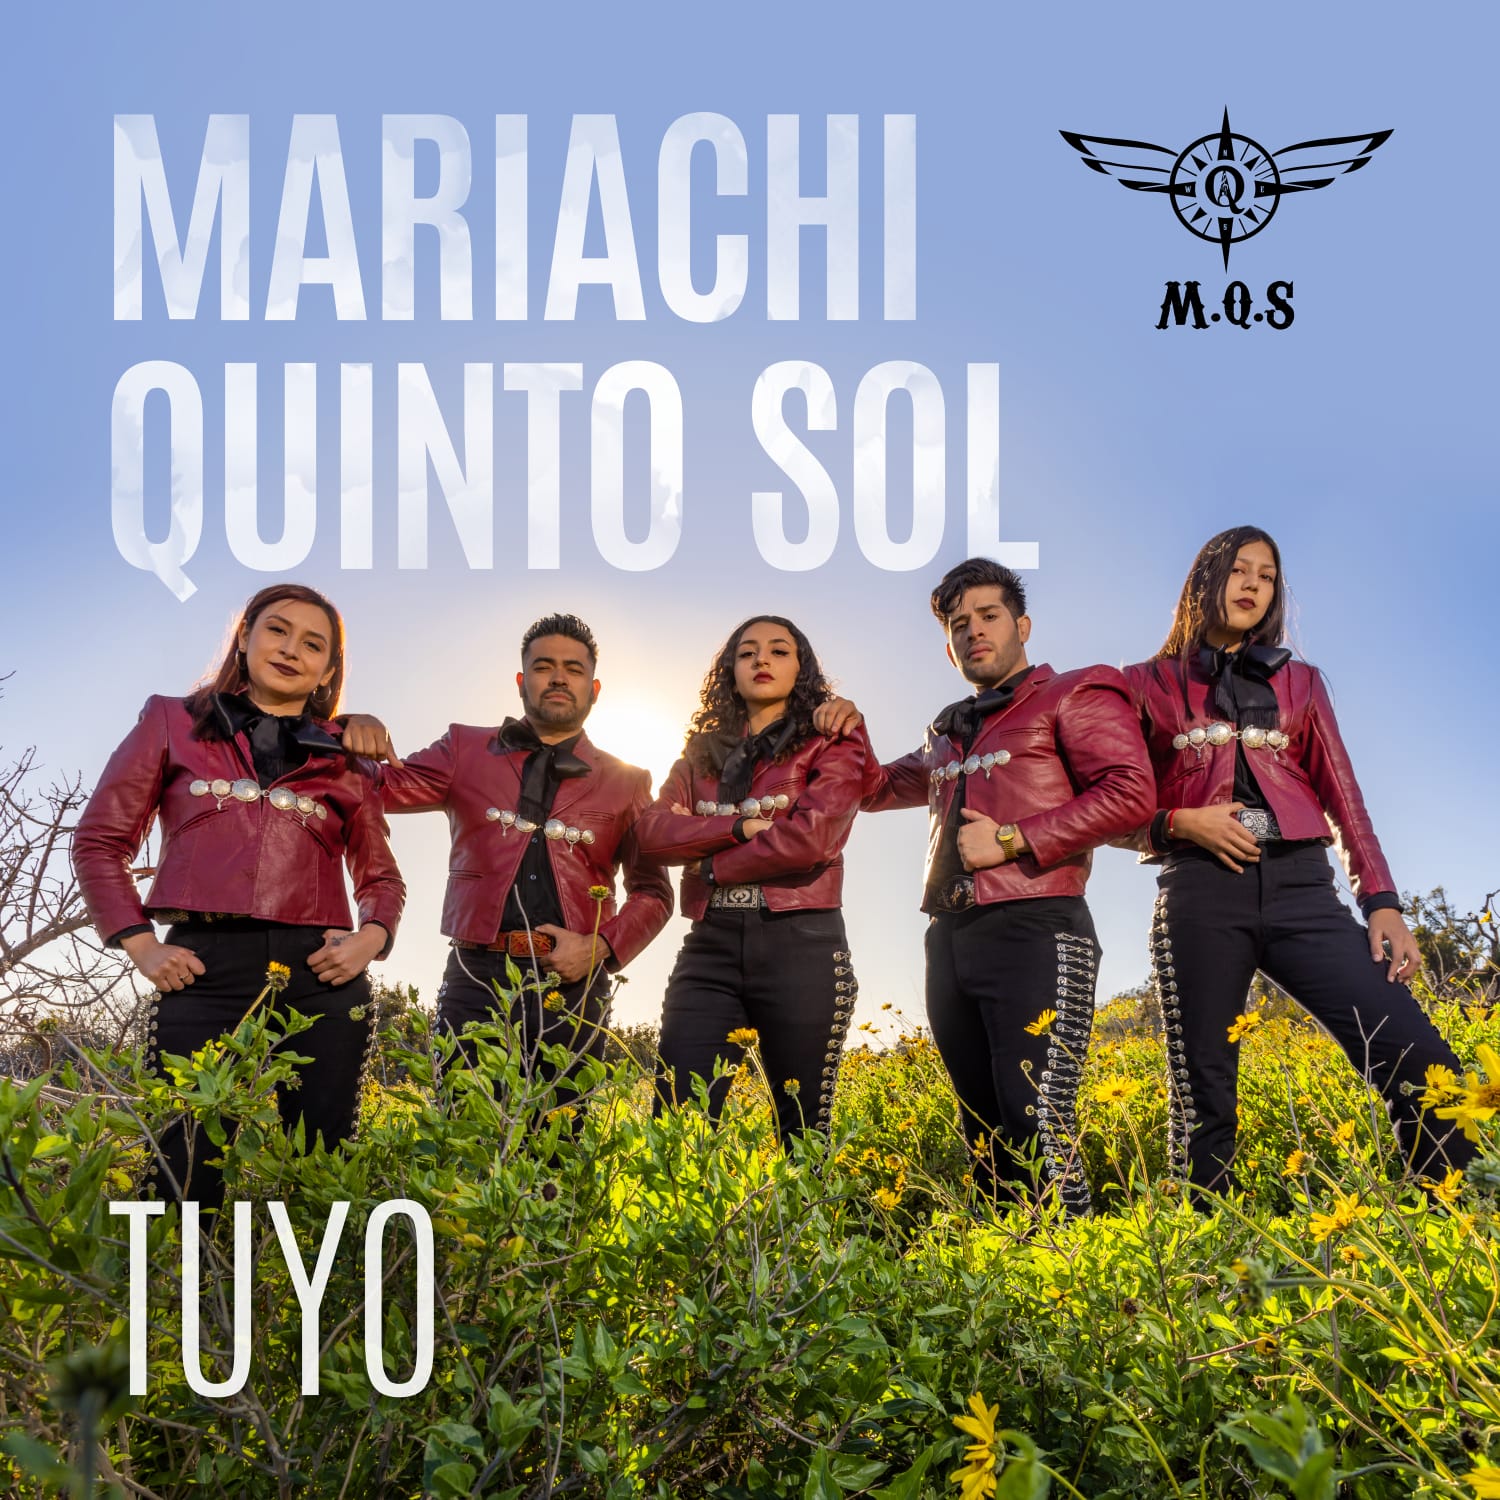 Mariachi Quinto Sol is a modern mariachi sextet